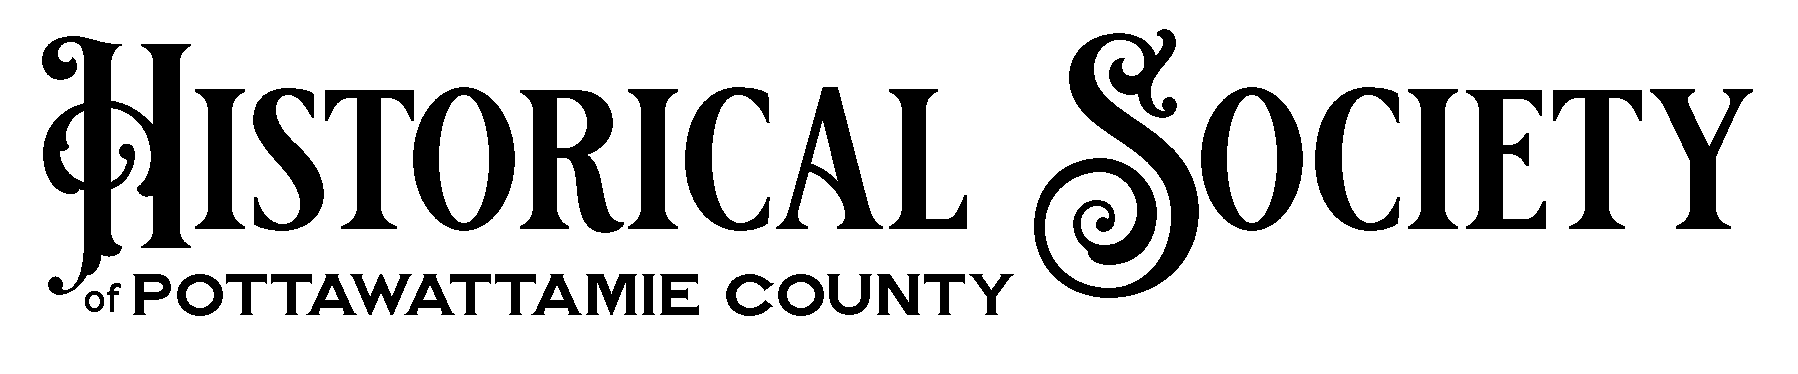 HSPC logo 2